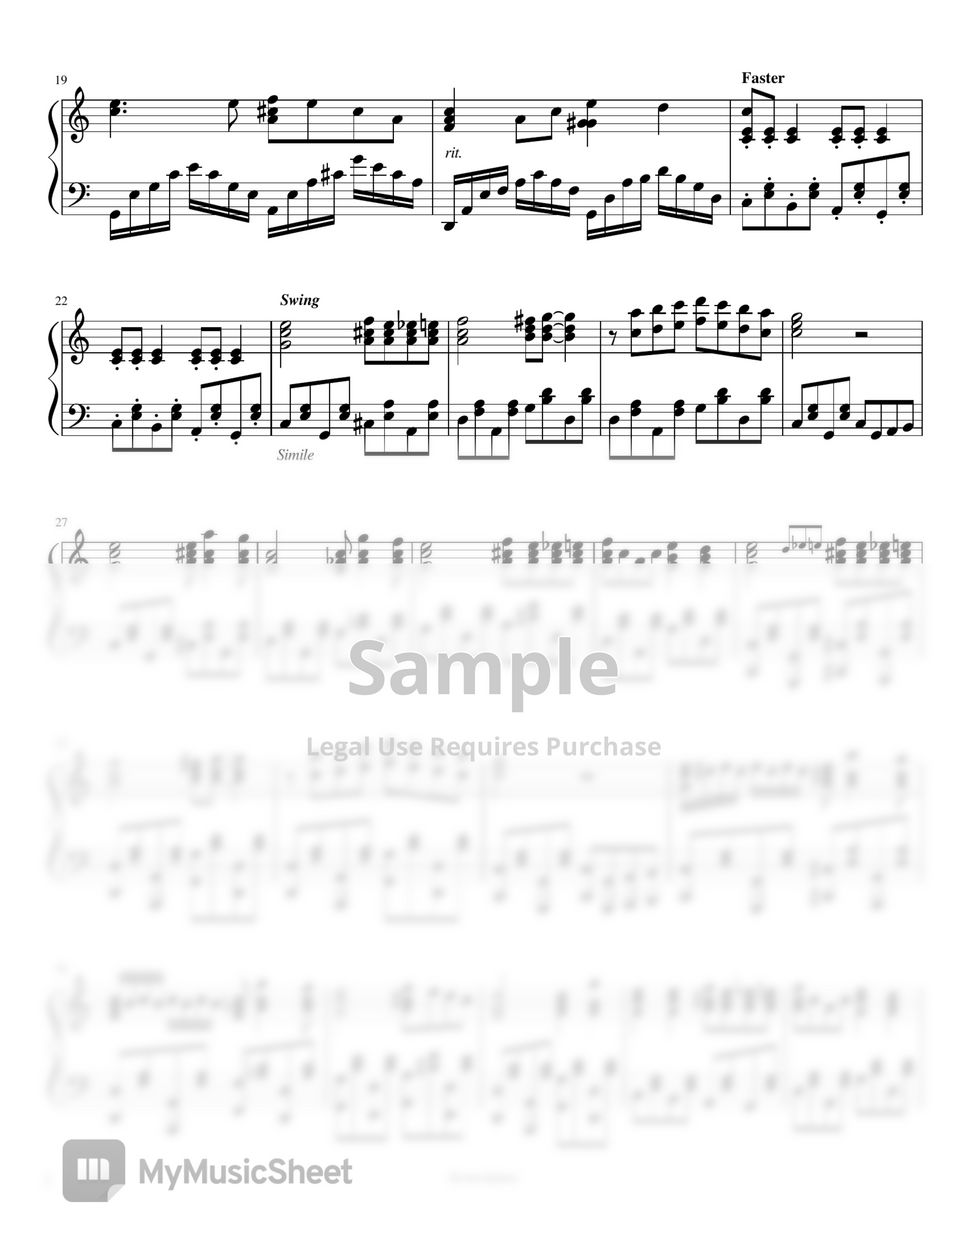 Irving Berlin - White Christmas (Romantic Jazz) by Scores4piano